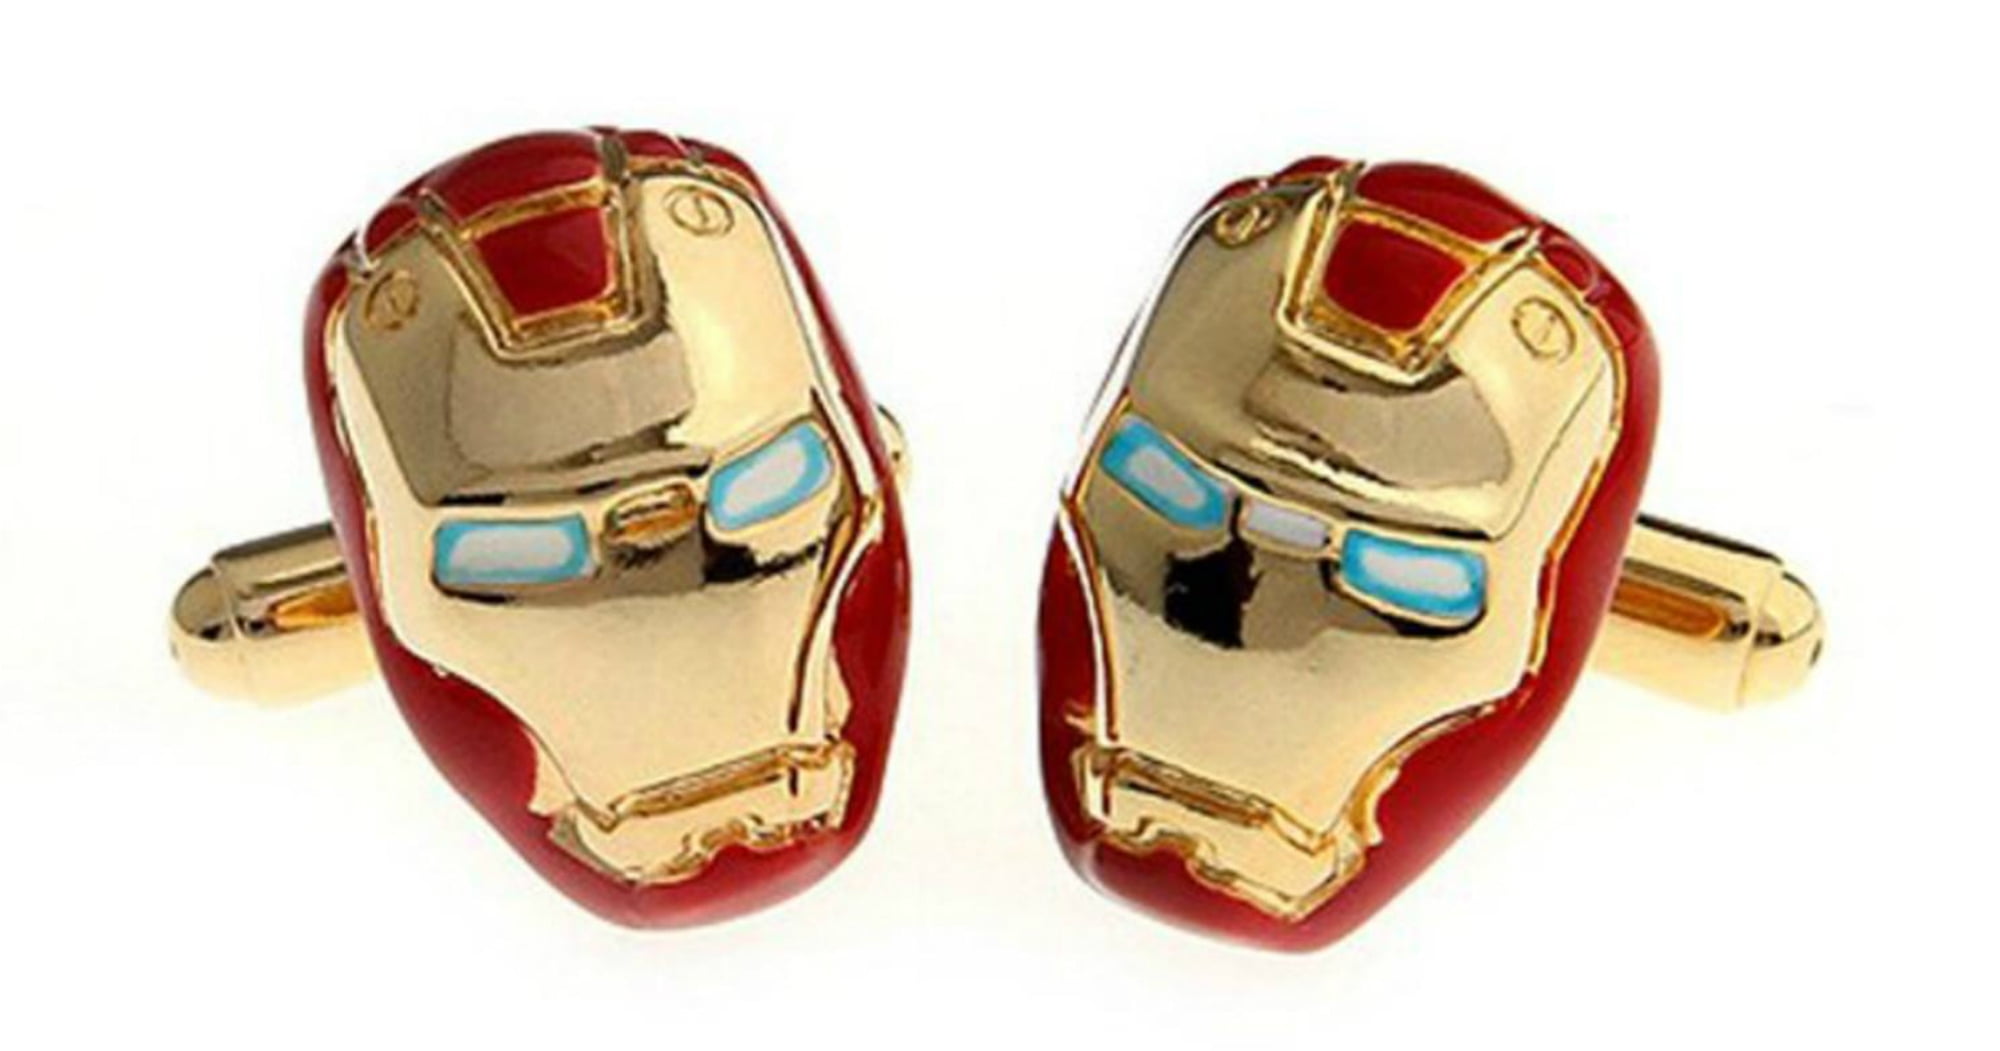 Iron Man 2 Silver Cufflinks